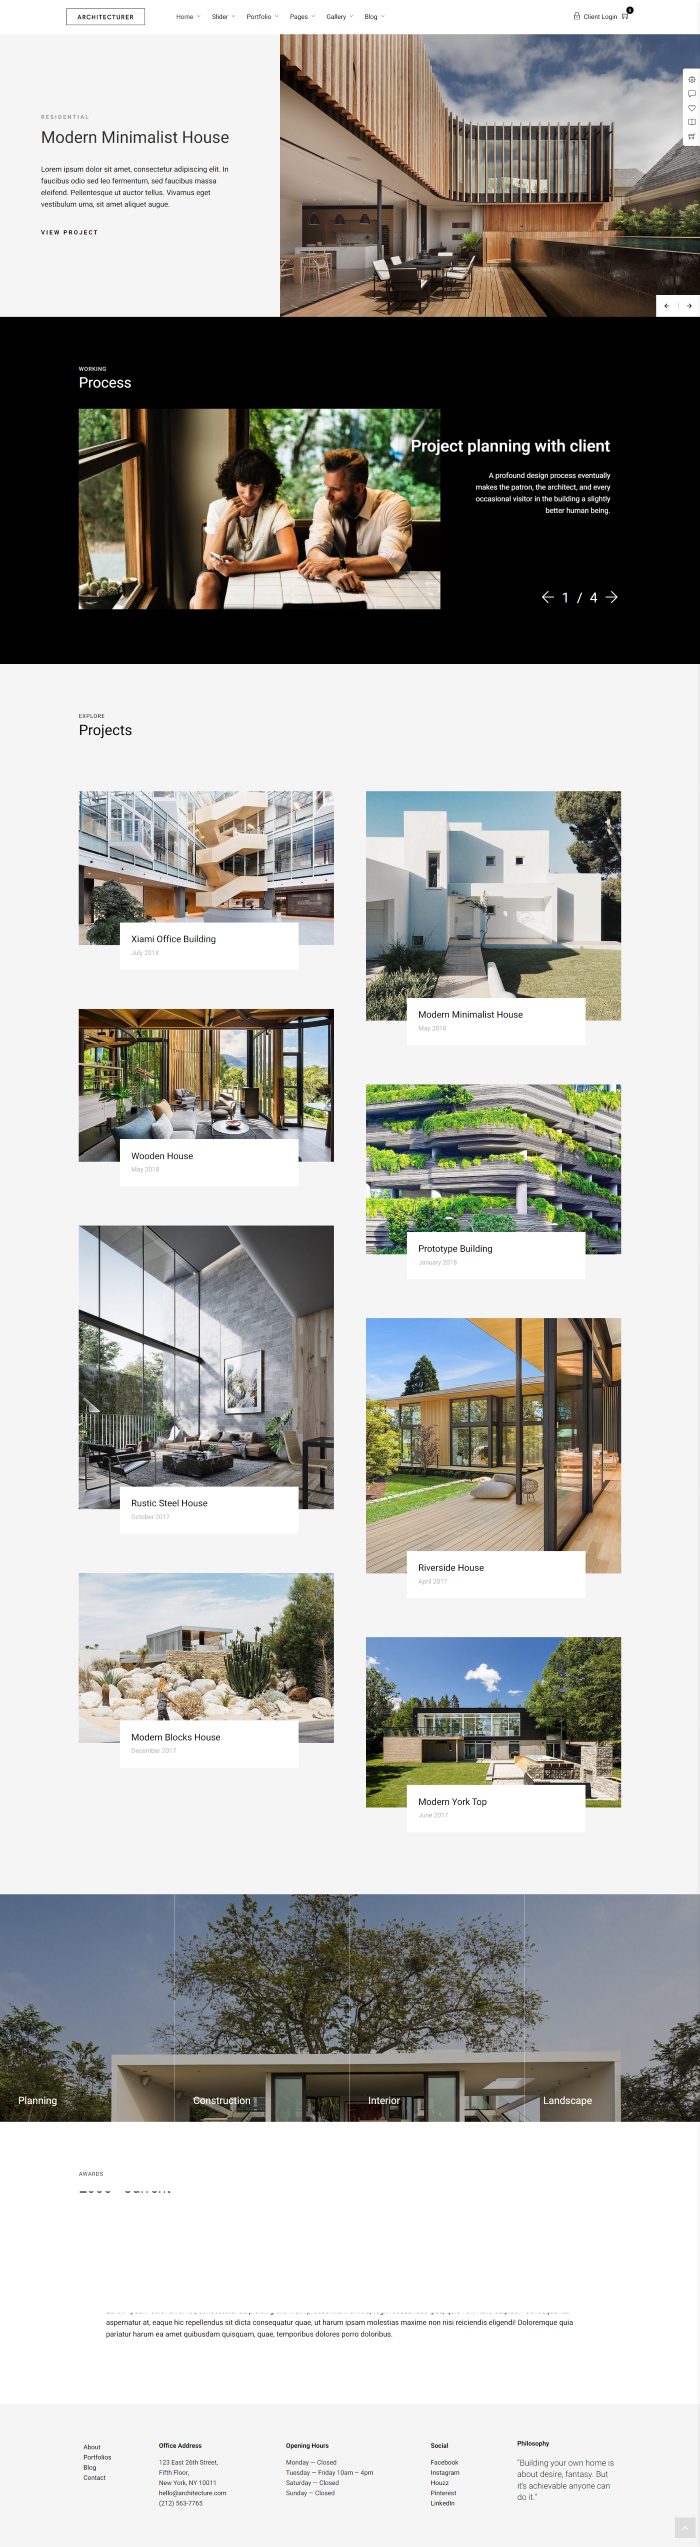 Mẫu website thiết kế nội thất - architecturer home 11